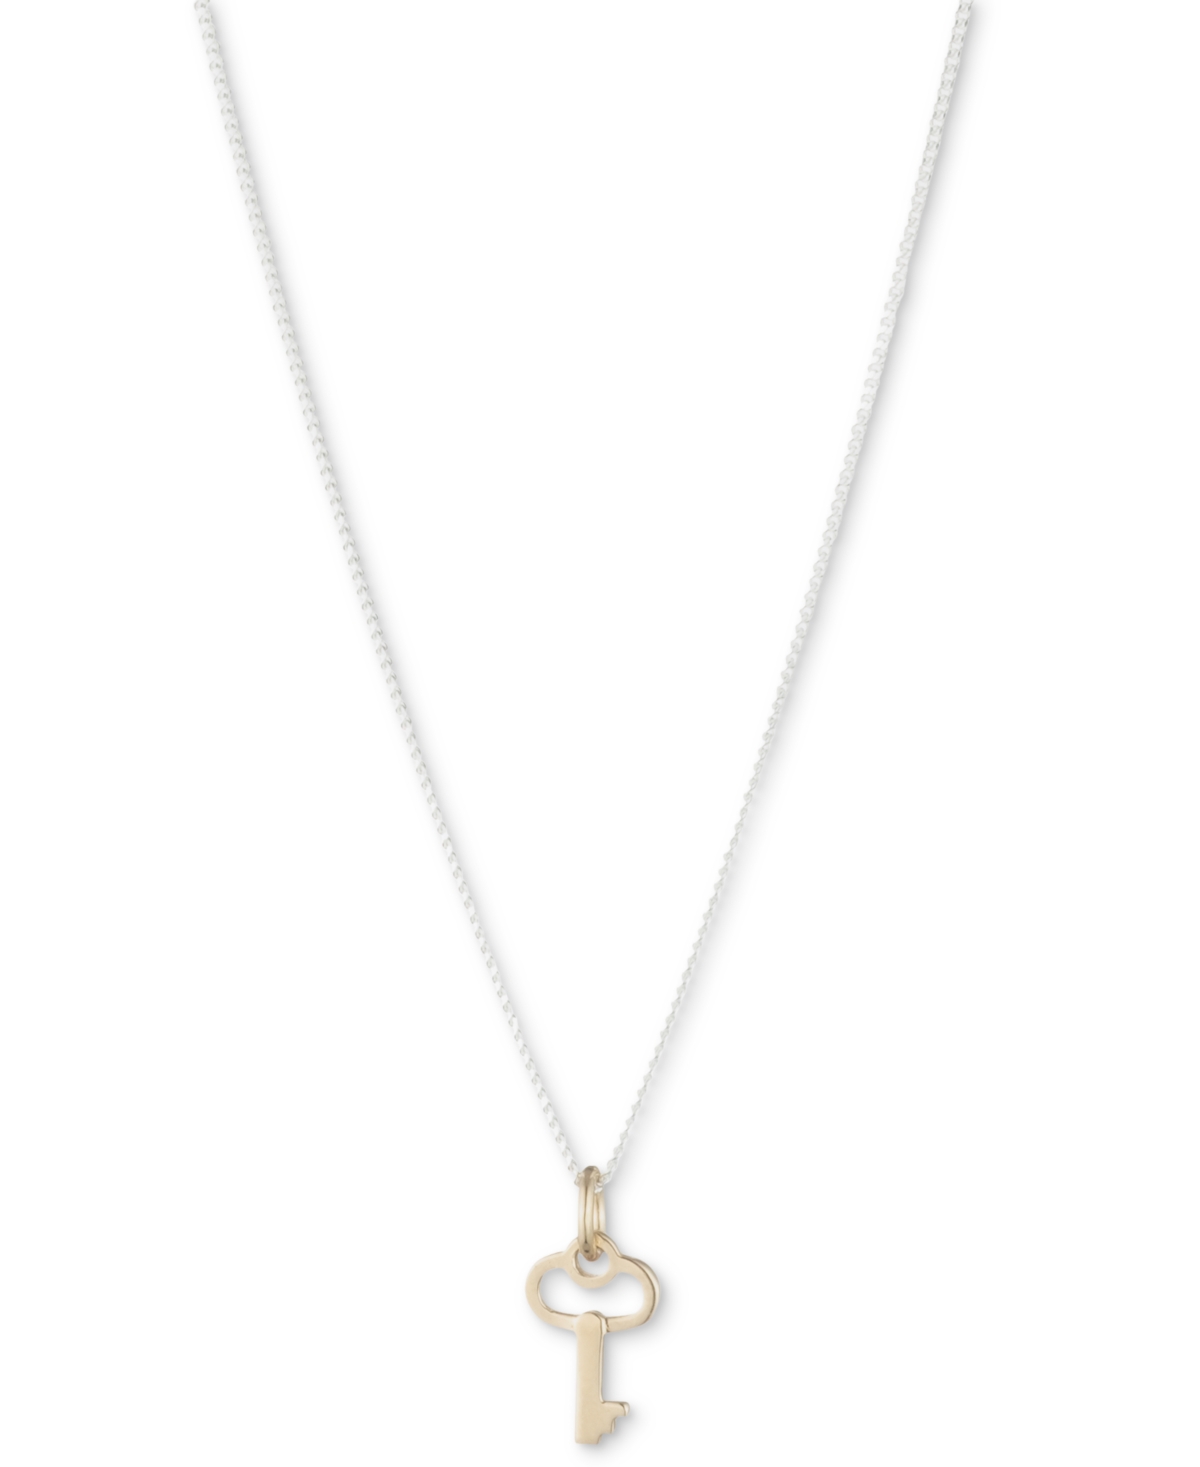 Lauren Ralph Lauren Key Pendant Necklace in Sterling Silver & 18k Gold-Plate, 14" + 3" extender - Gold Over Silver